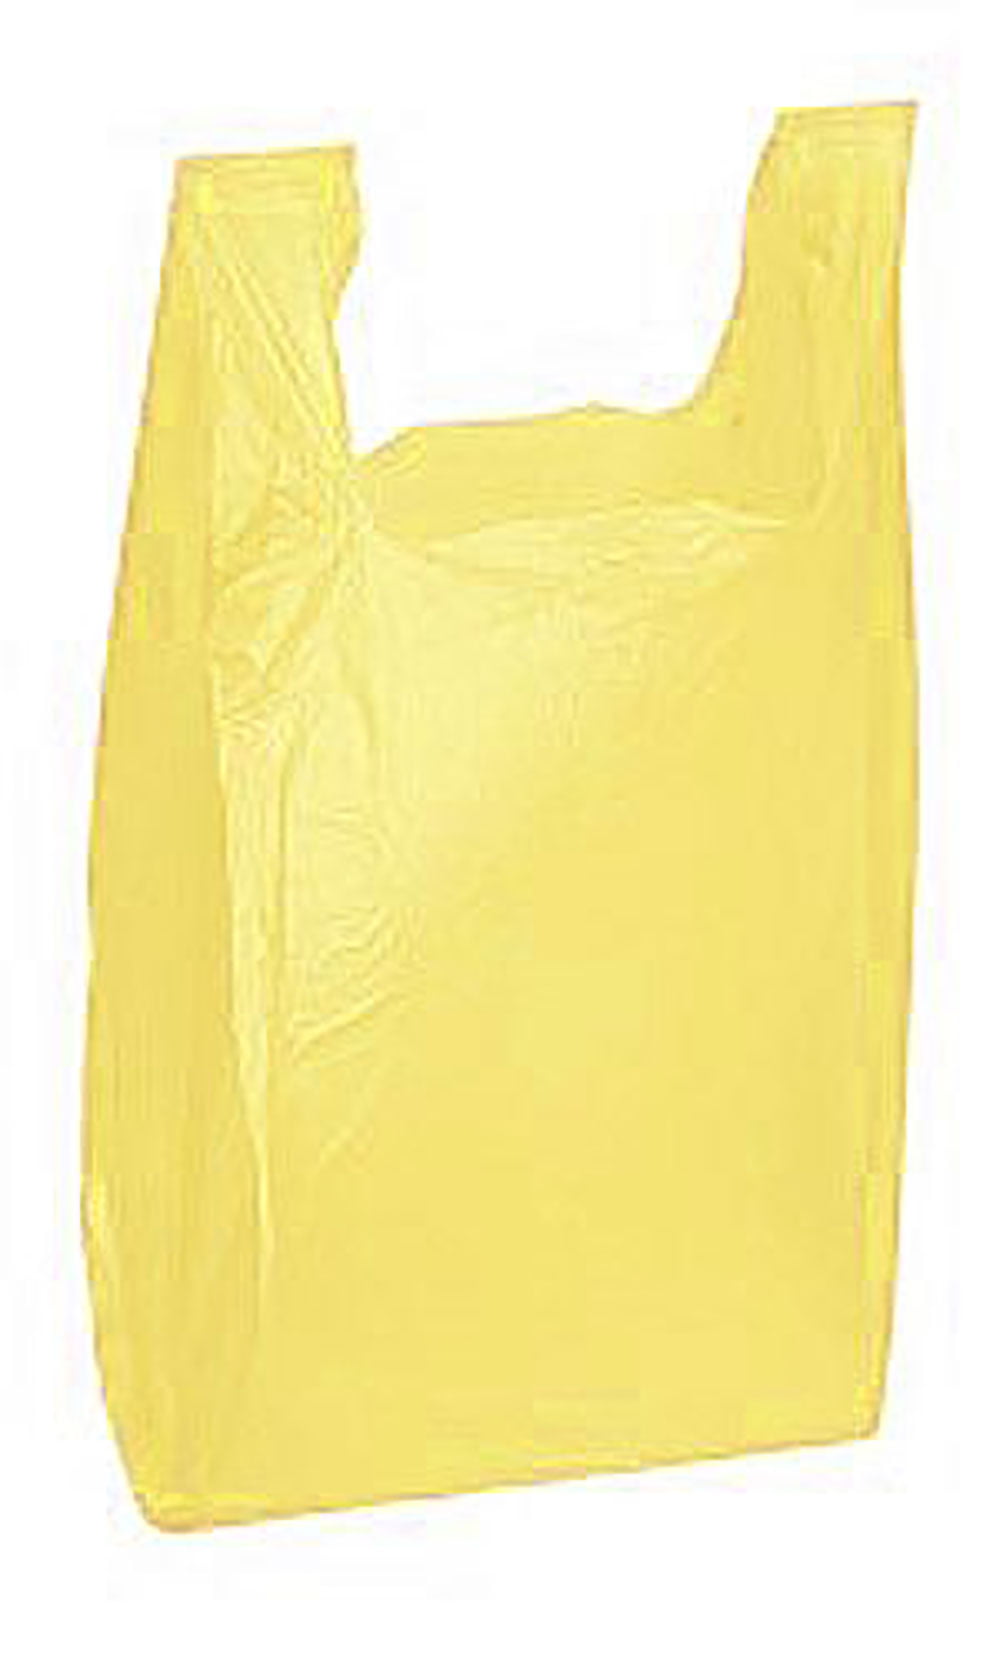 Yellow Plastic T-Shirt Shopping Bags - Case of 1,000 - Walmart.com ...